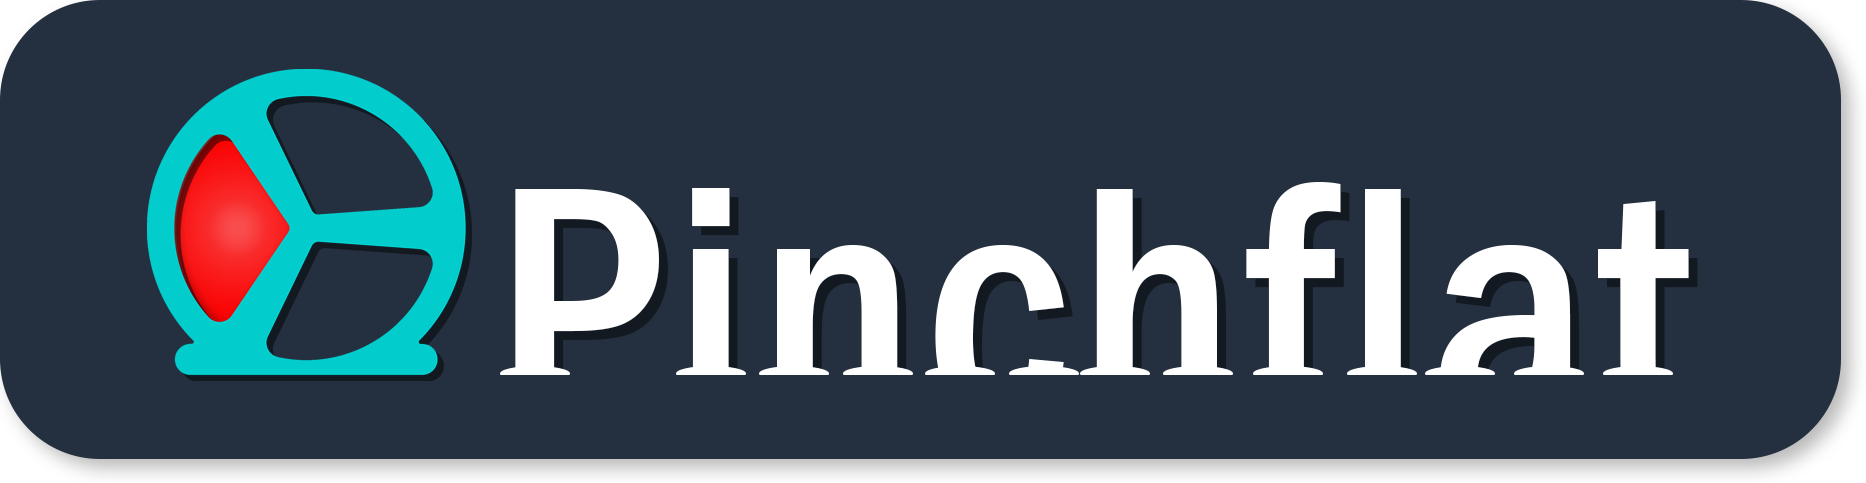 Pinchflat Logo by @hernandito